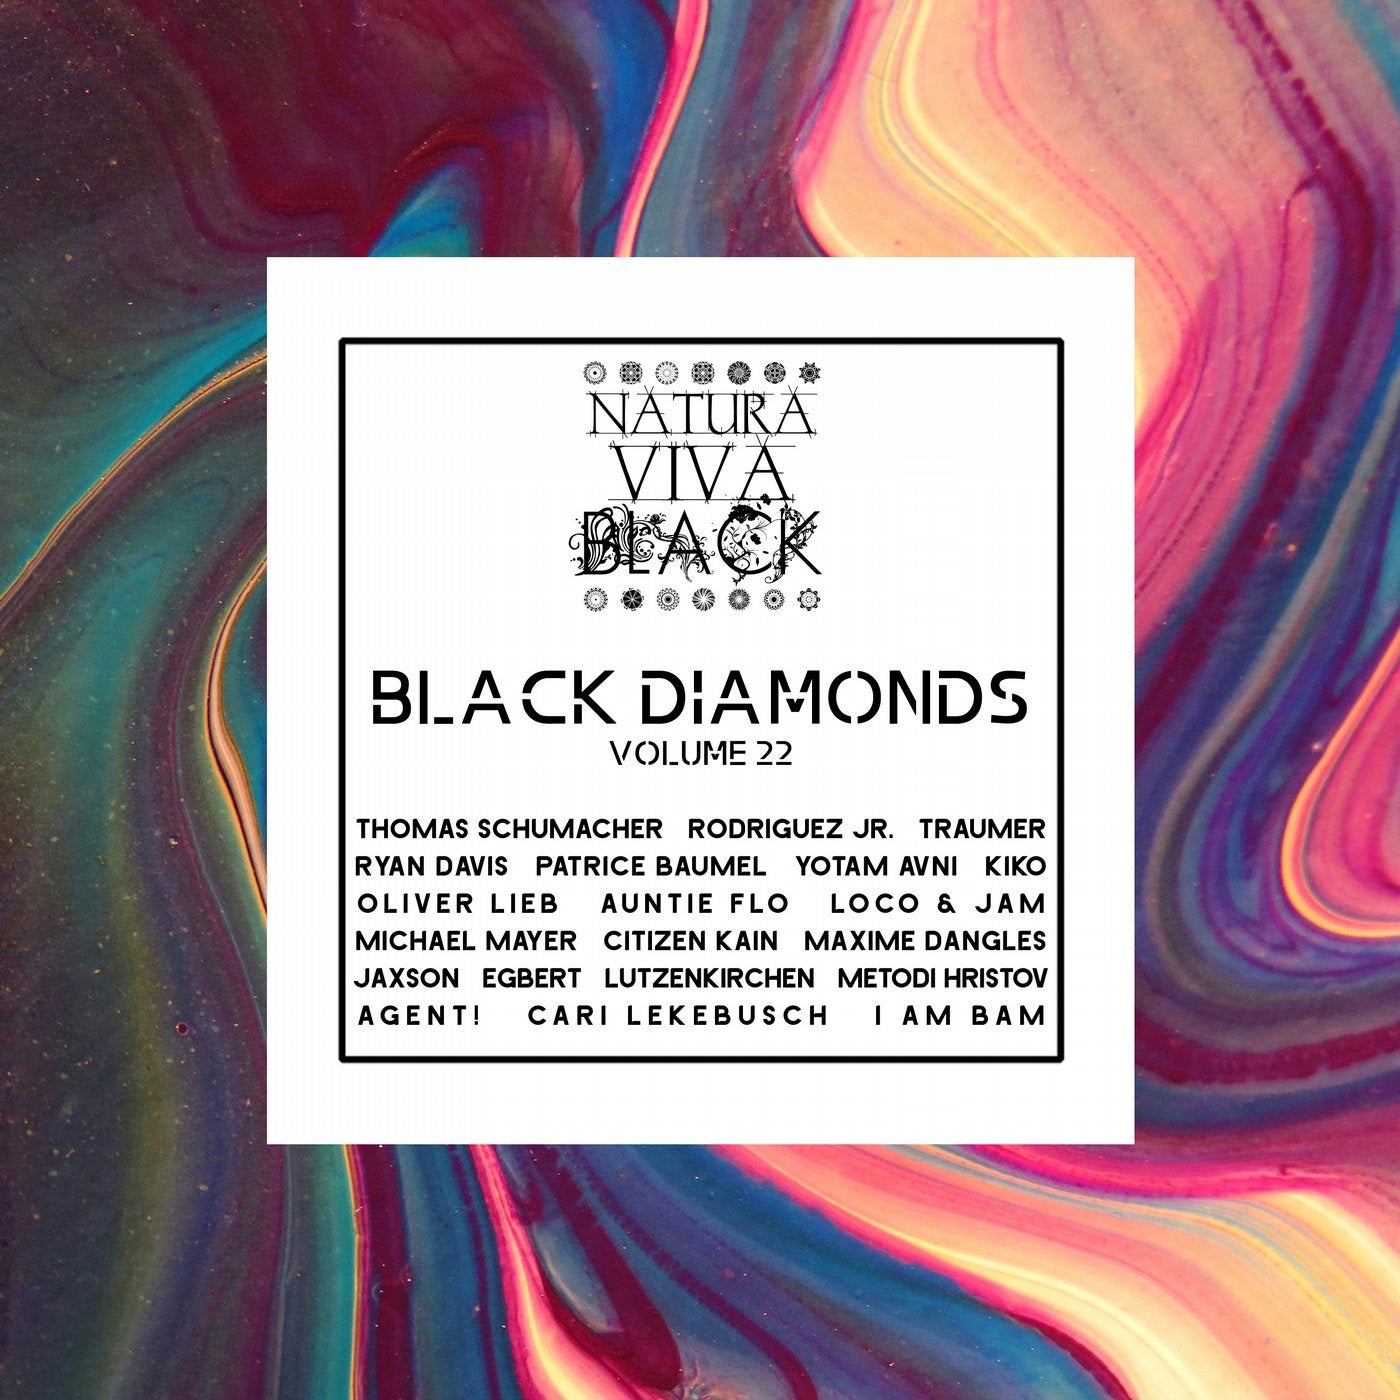 Black Diamonds Volume 22